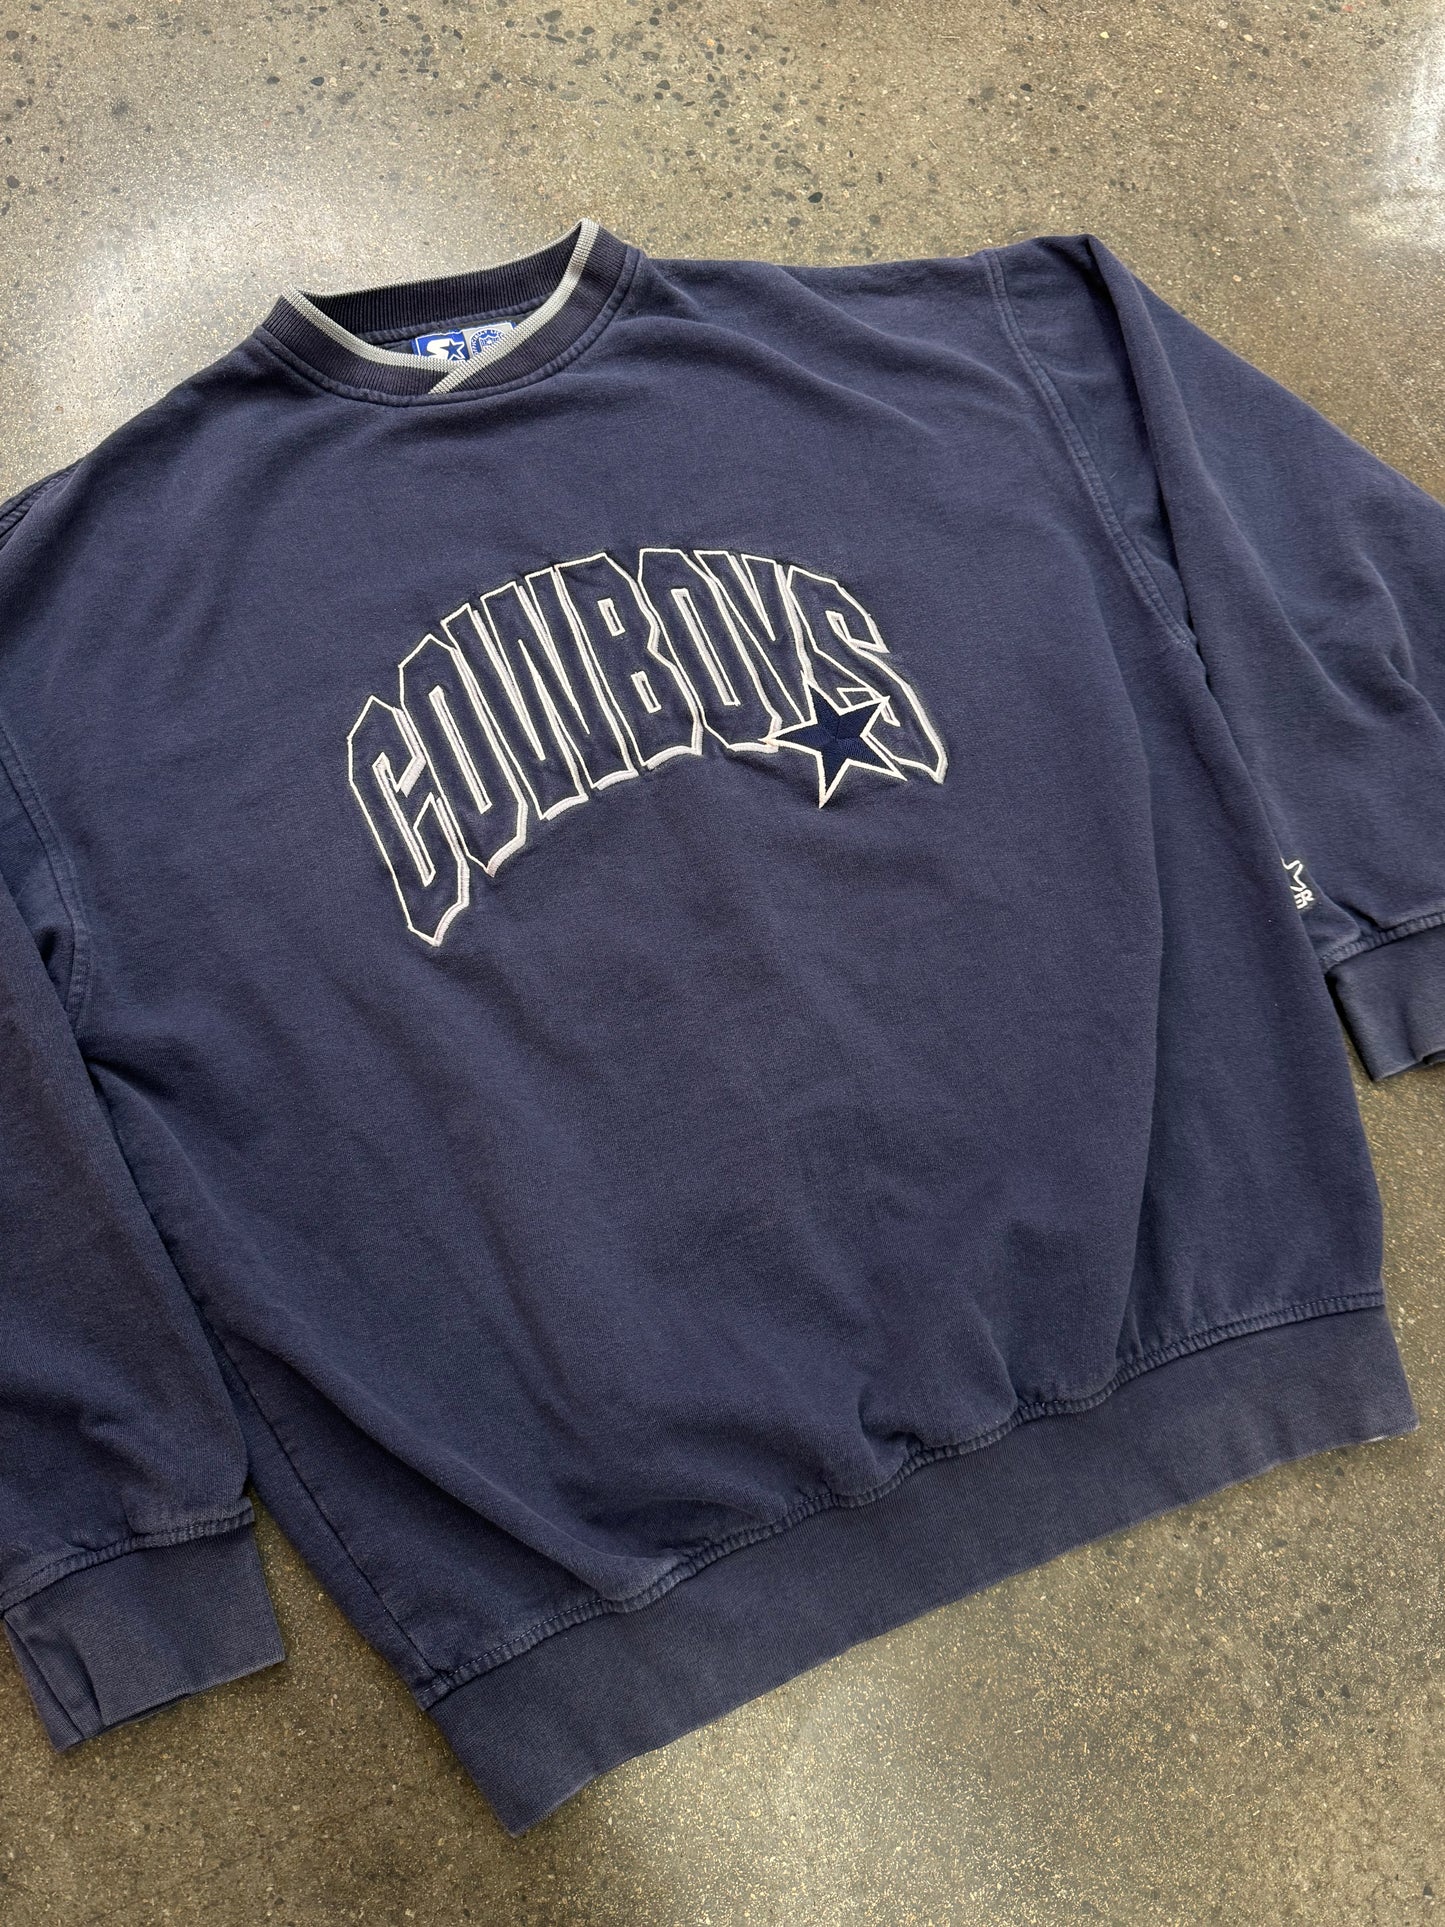 Vintage Dallas Cowboys Starter Crewneck Sweater Size XL